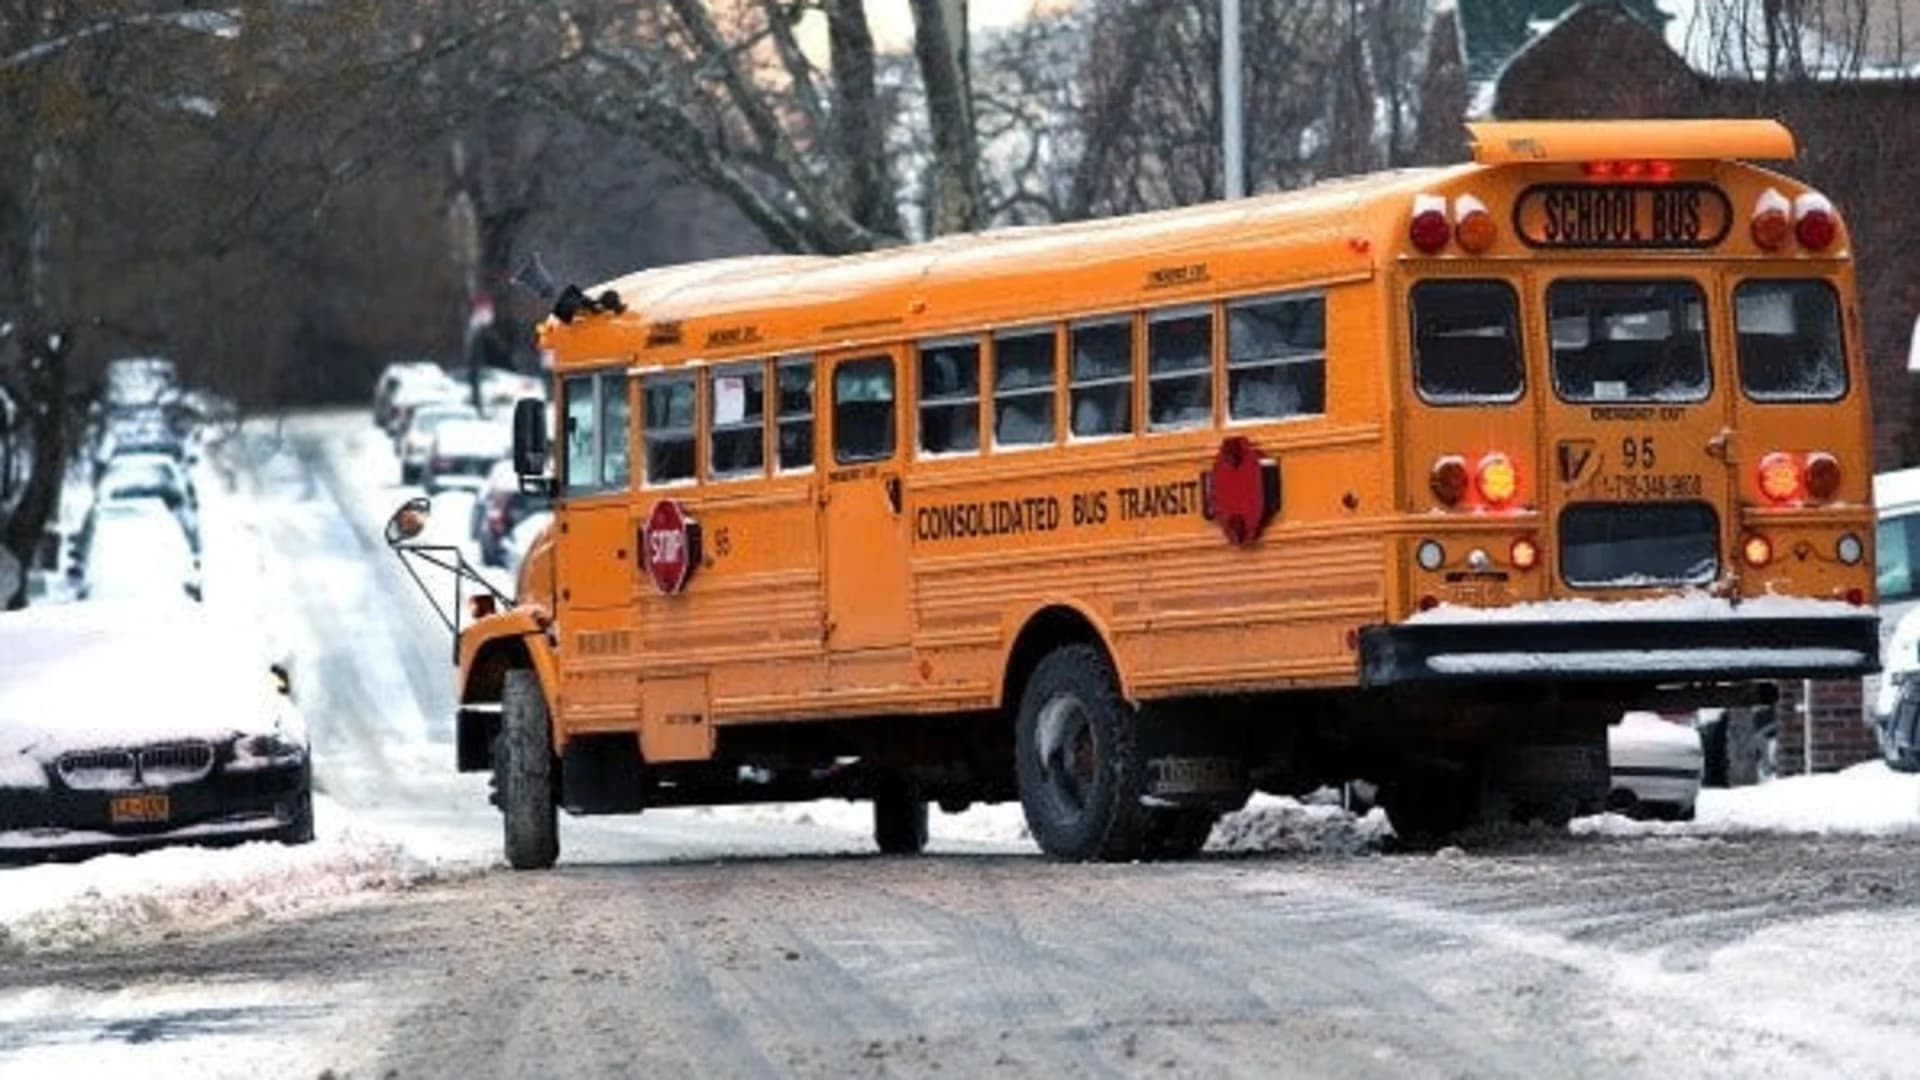 New York City public schools open today